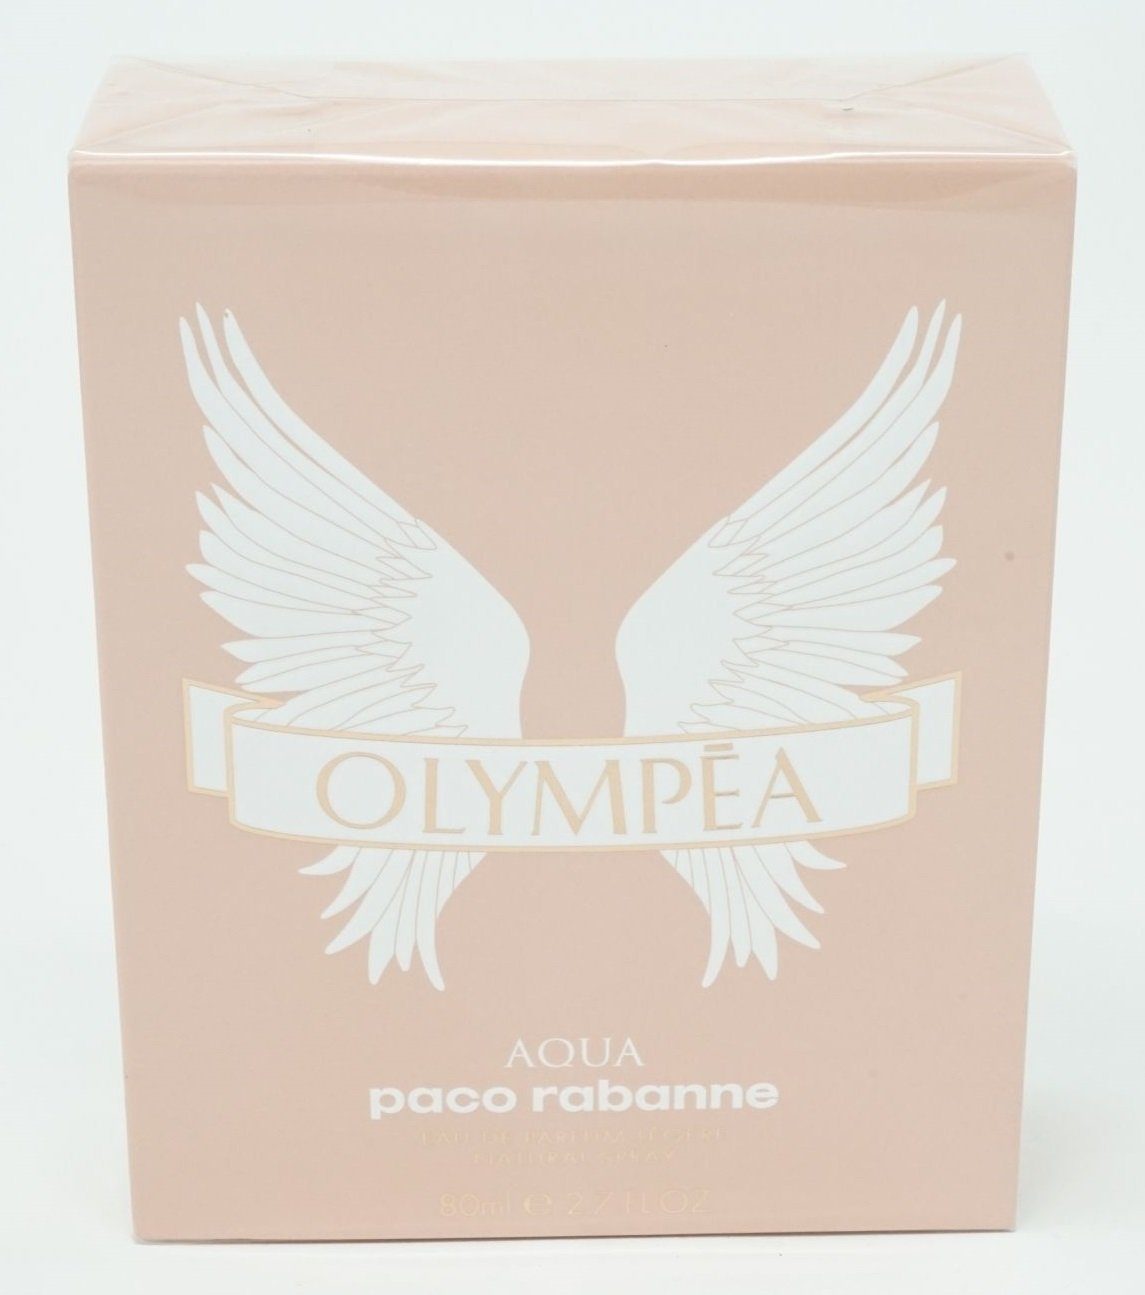 Eau Paco Olympea de Spray de 80ml rabanne Eau paco Parfum Legere Rabanne Aqua Parfum